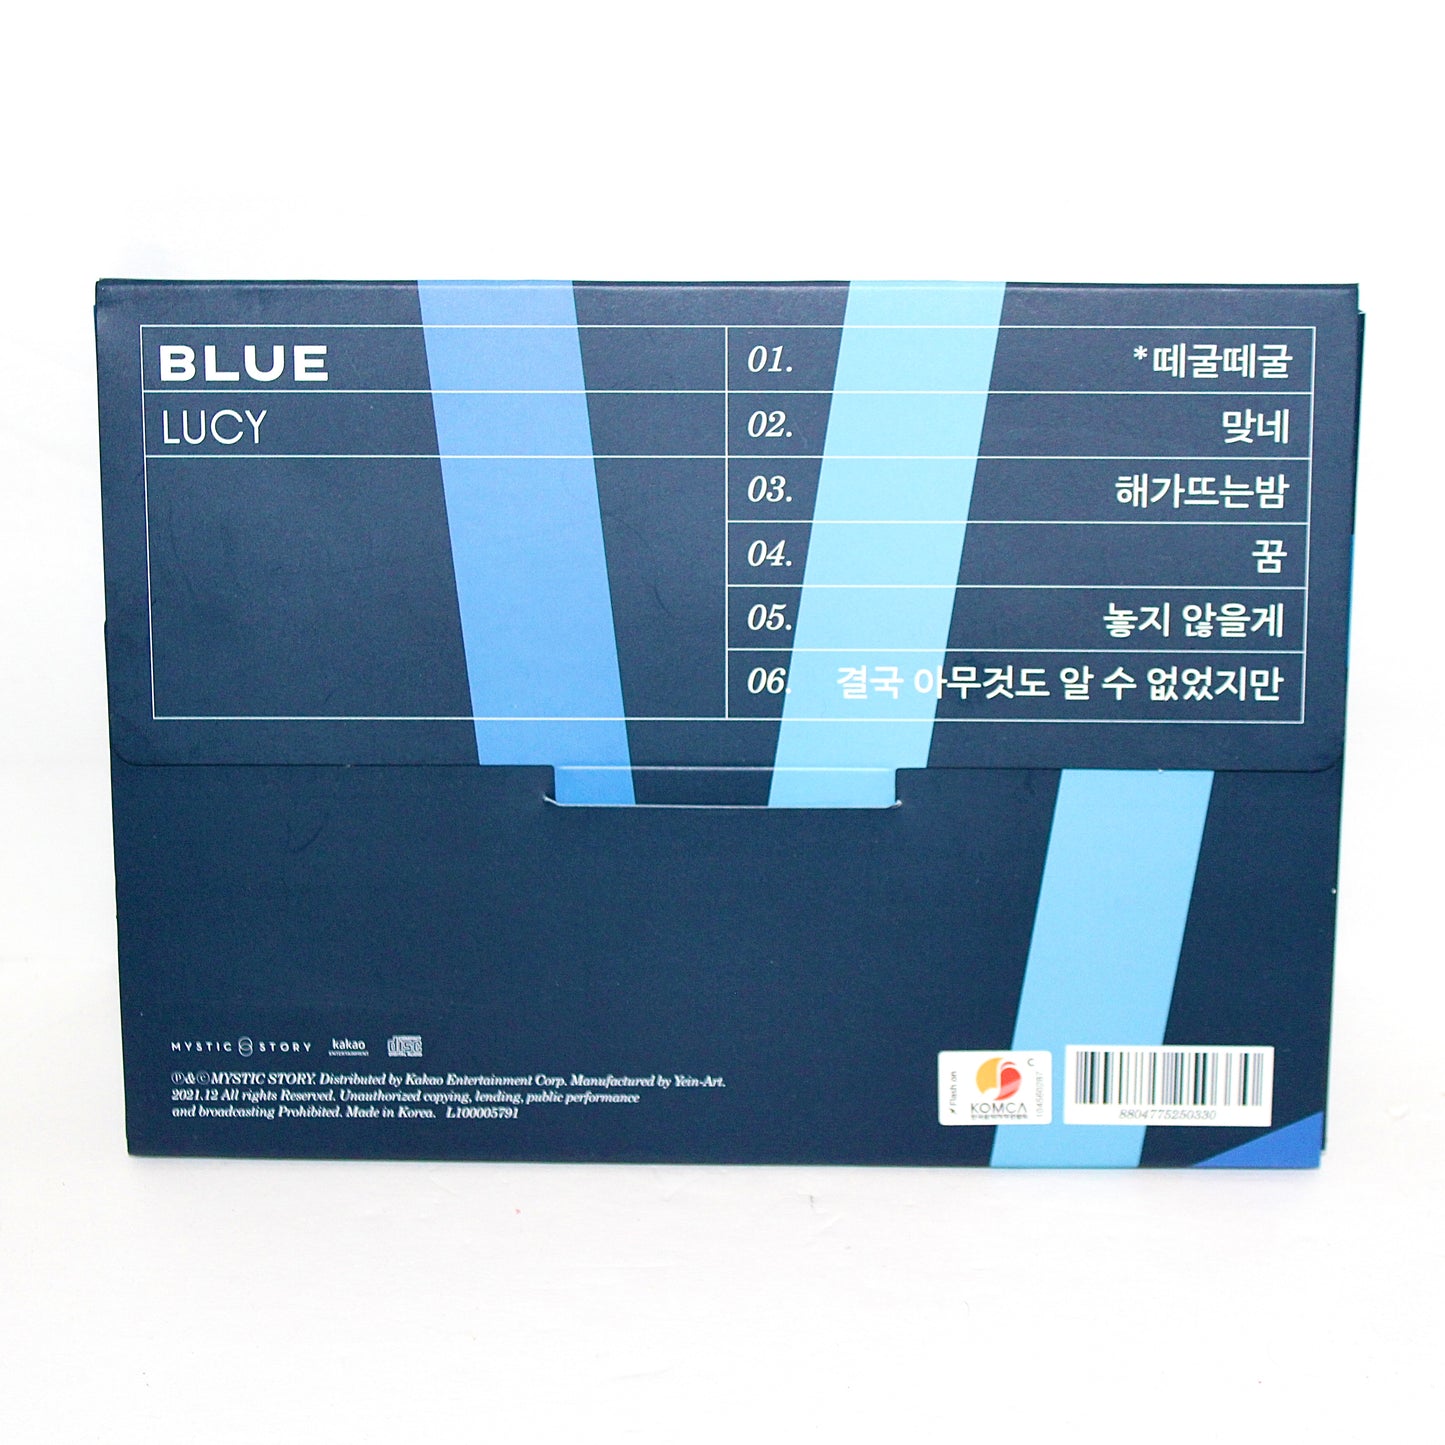 LUCY 2nd Mini Album: Blue